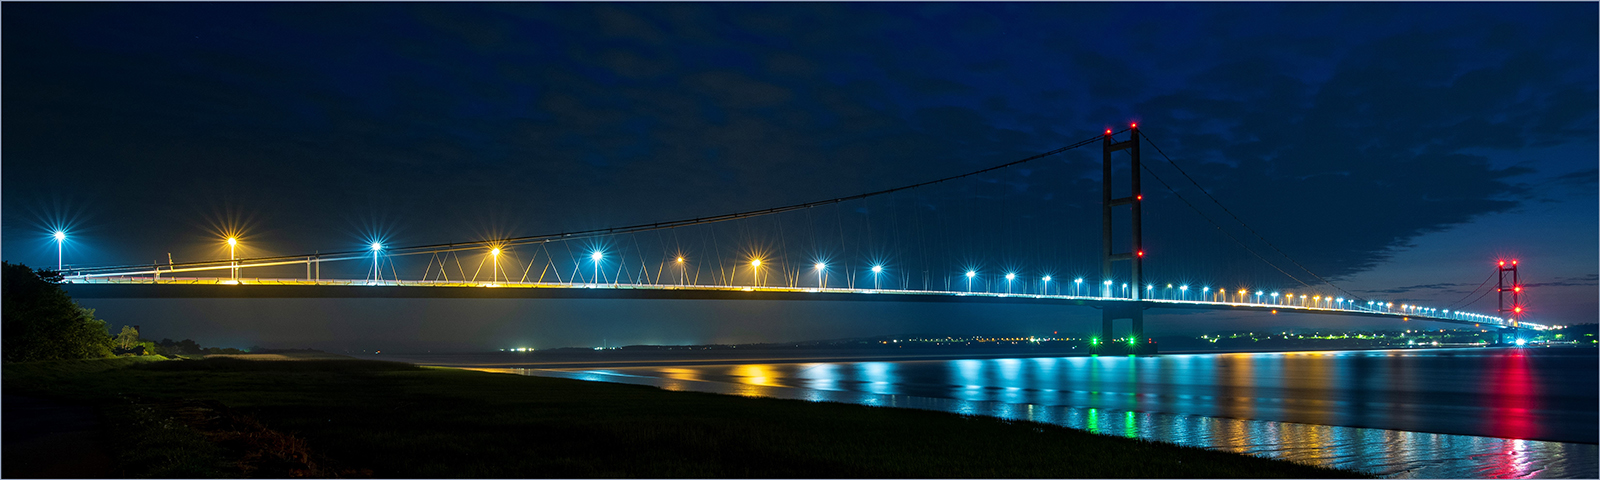 6 Humber Bridge at Night